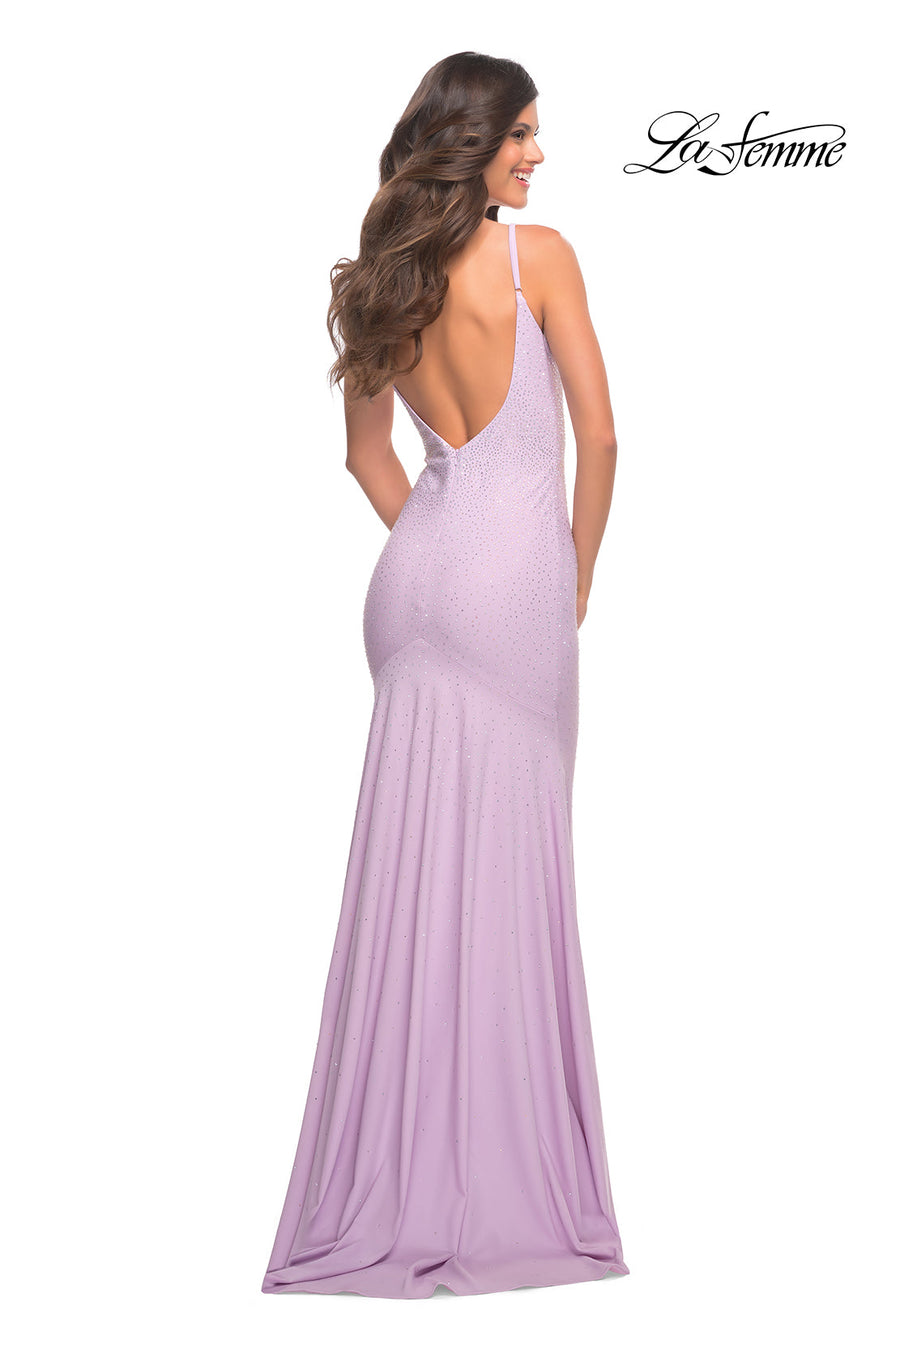 La Femme 30563 prom dress images.  La Femme 30563 is available in these colors: Cloud Blue, Light Coral, Periwinkle.